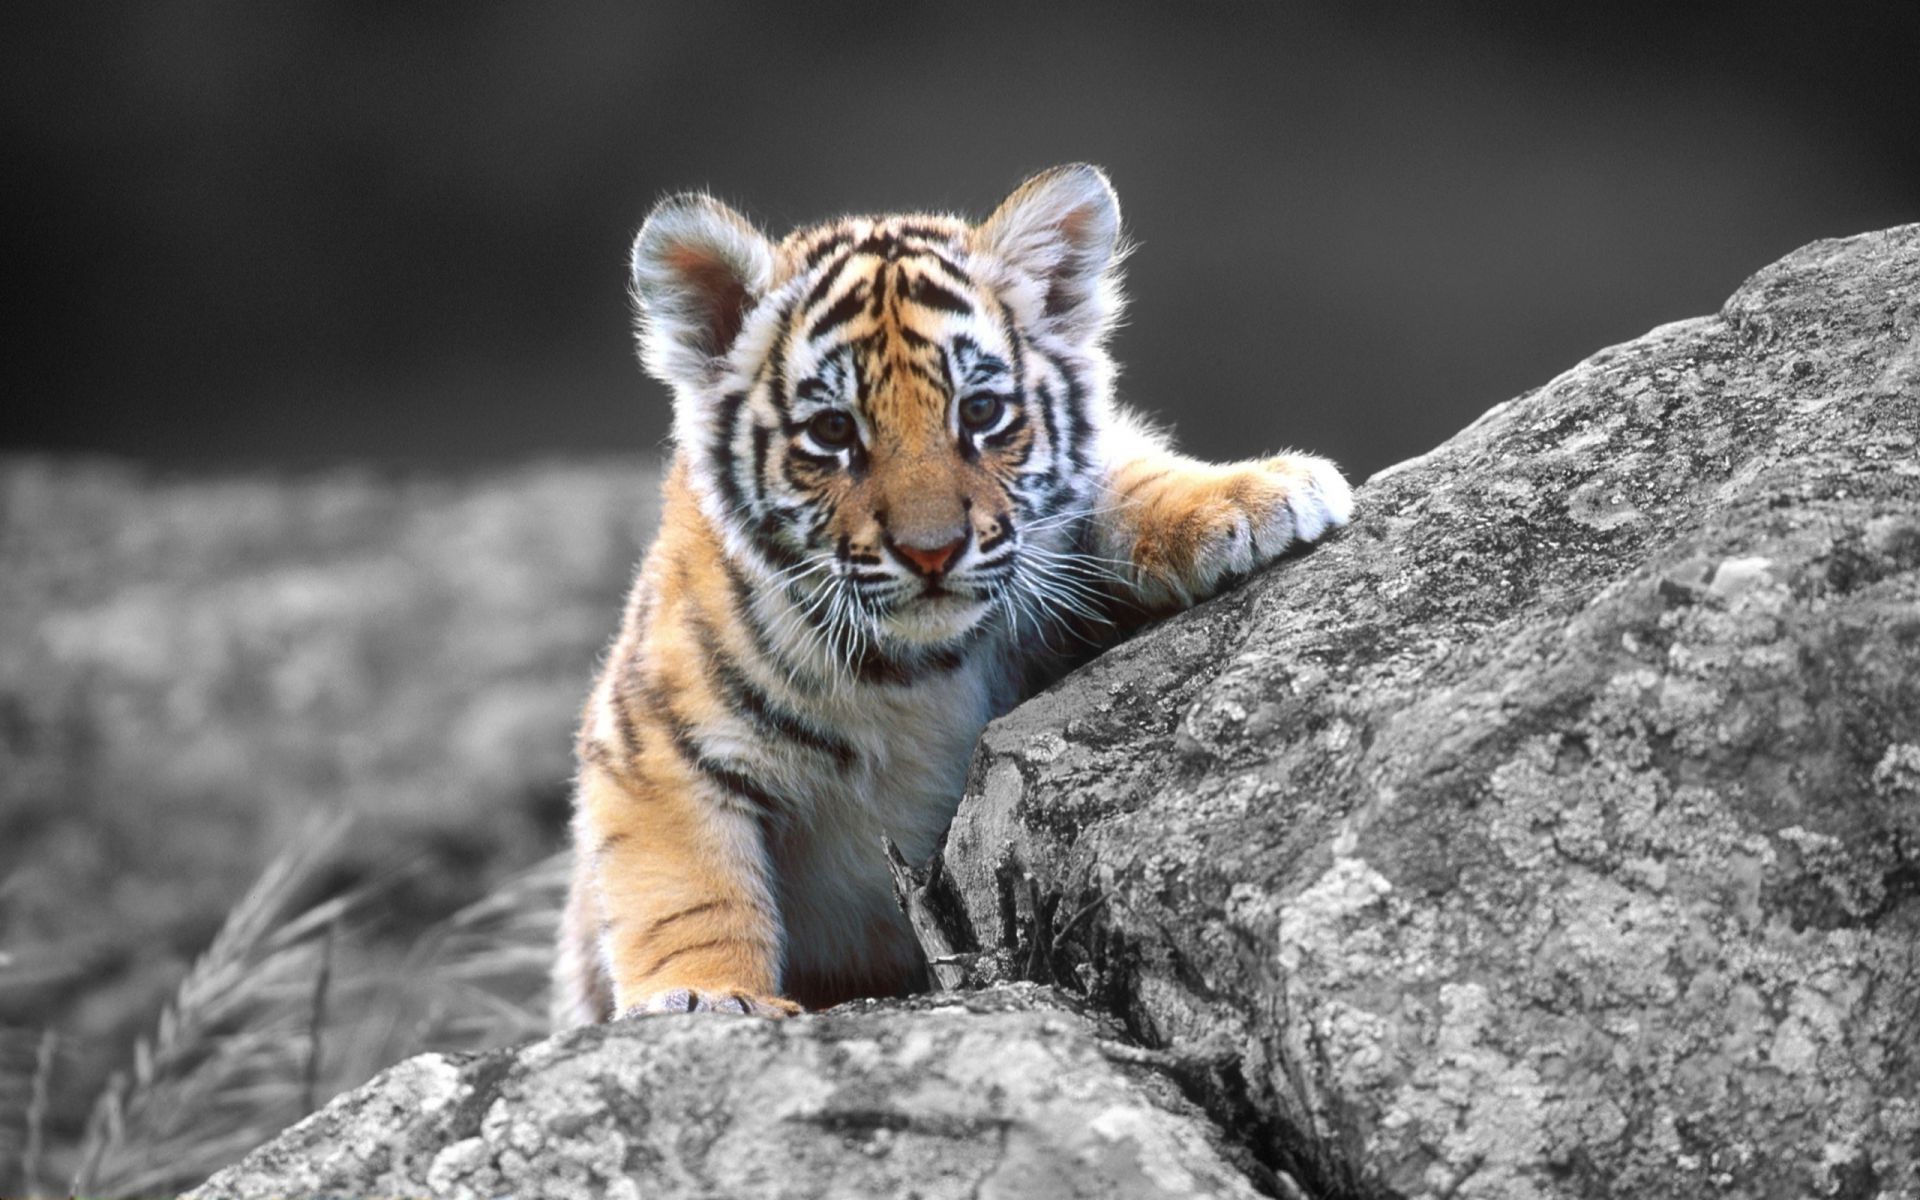 tigers wildlife nature wild animal predator mammal cat carnivore